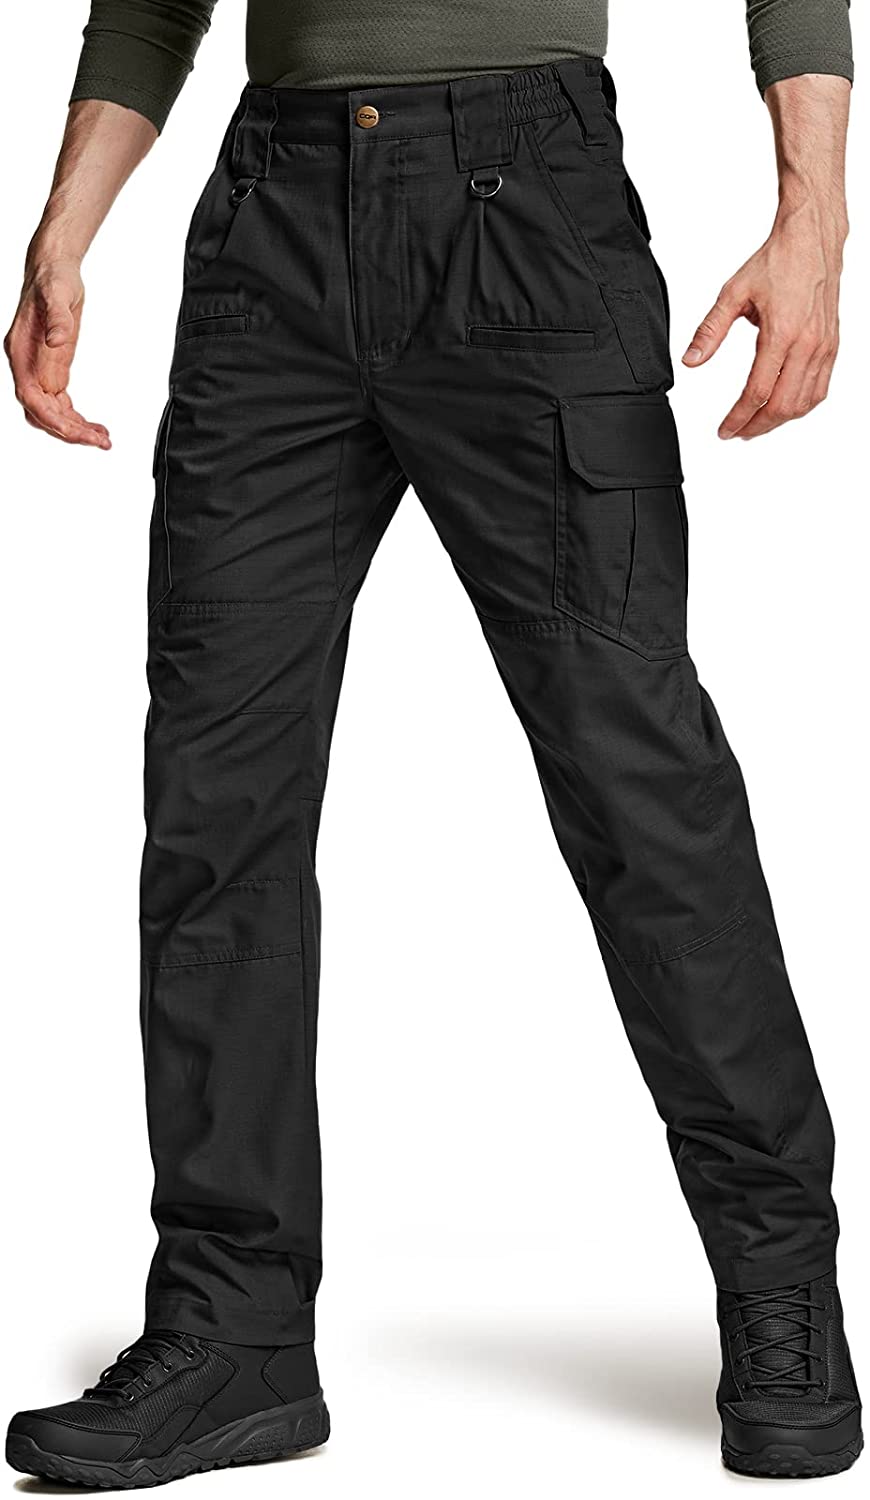 Water Resistant Ripstop Cargo Pants CQR Men's Flex Stretch Tactical Pants Lightweight EDC Outdoor Hiking Work Pants 